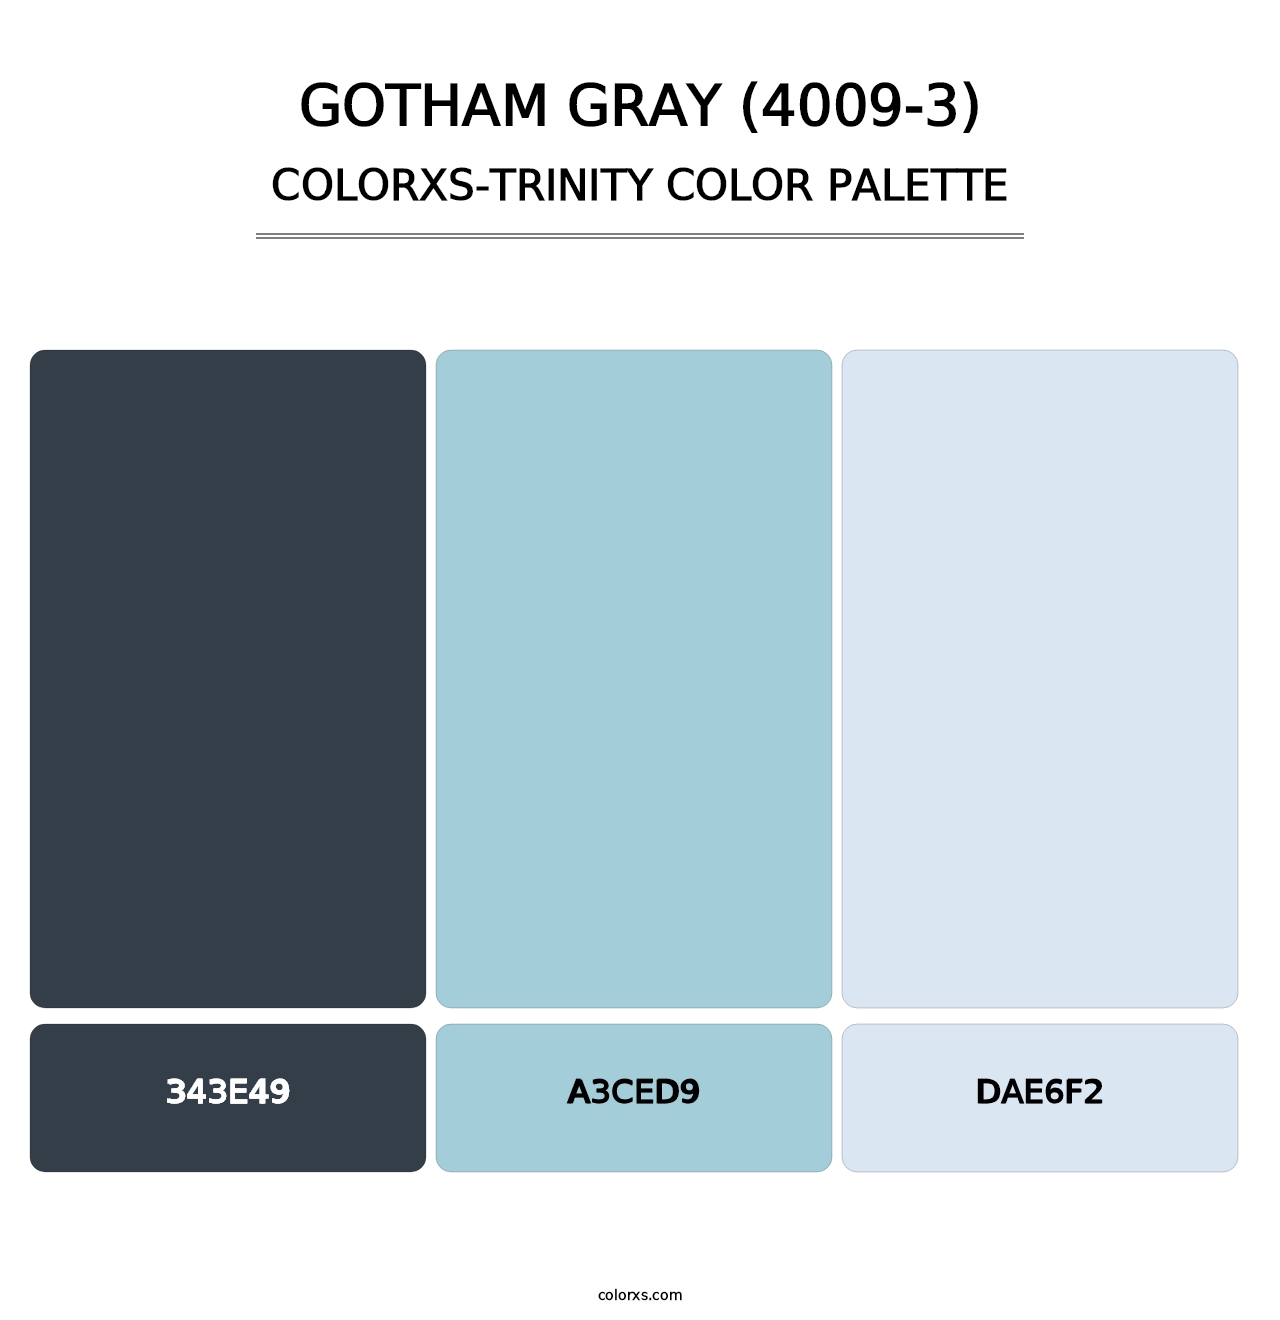 Gotham Gray (4009-3) - Colorxs Trinity Palette